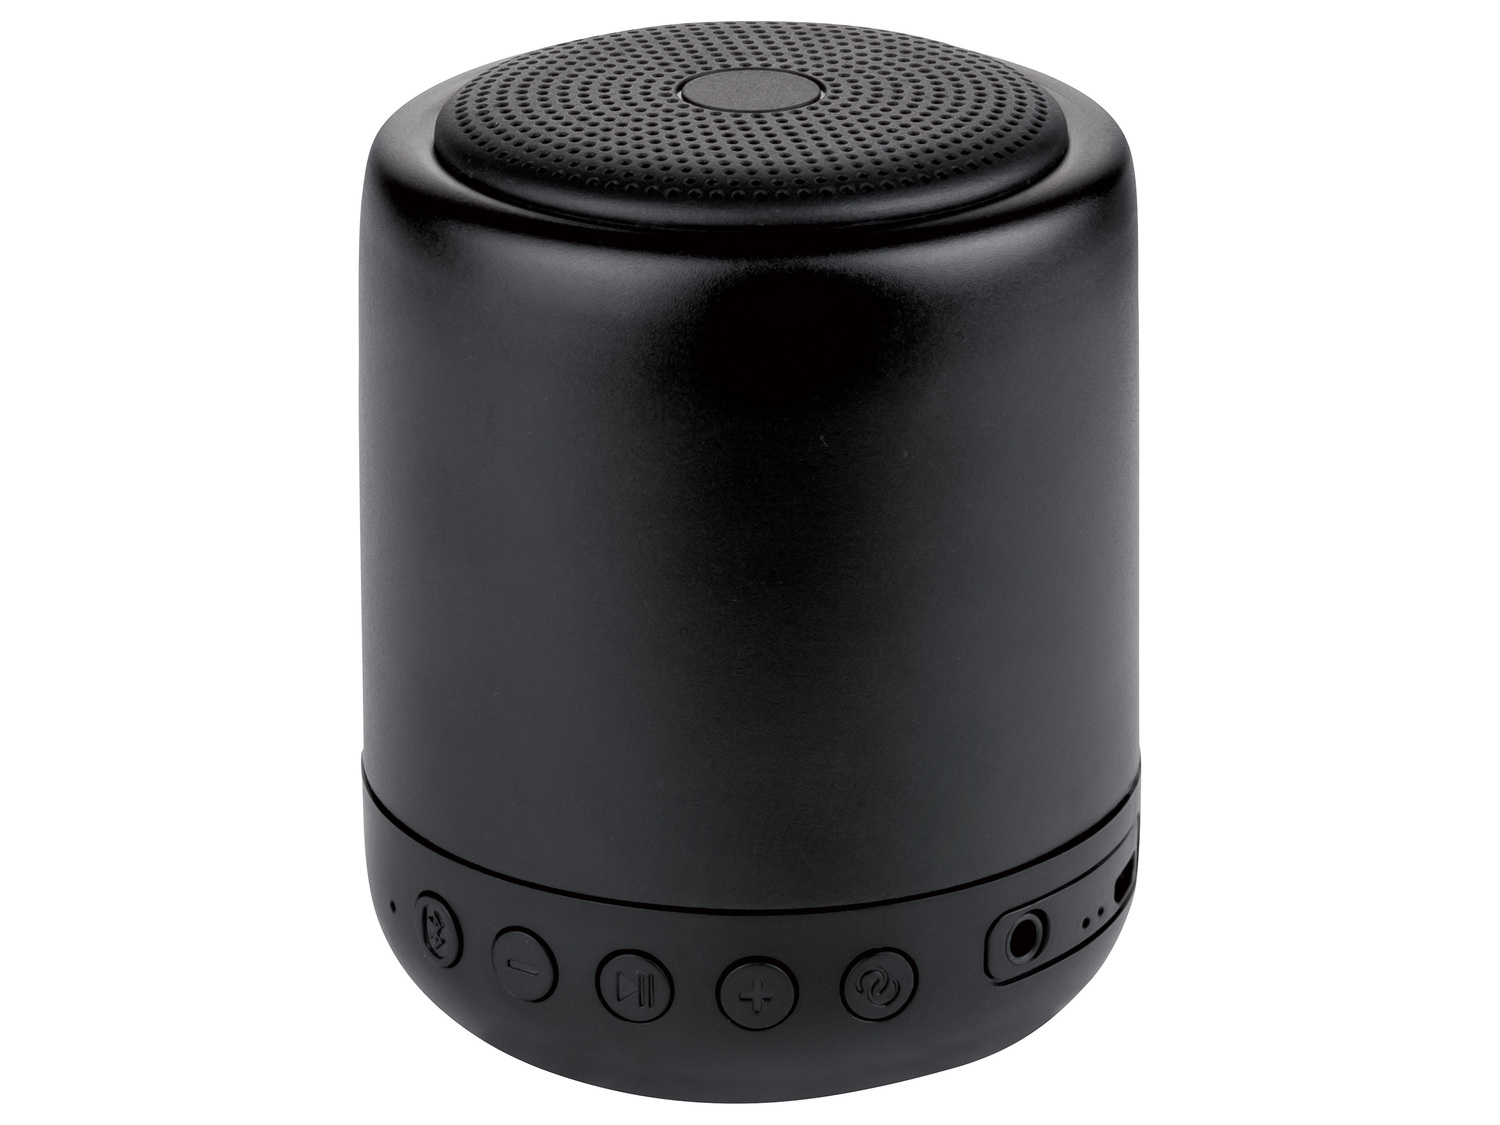 Enceinte Bluetooth® , le prix 6.99 € 
- Fonction True Wireless Stereo (TWS) ...